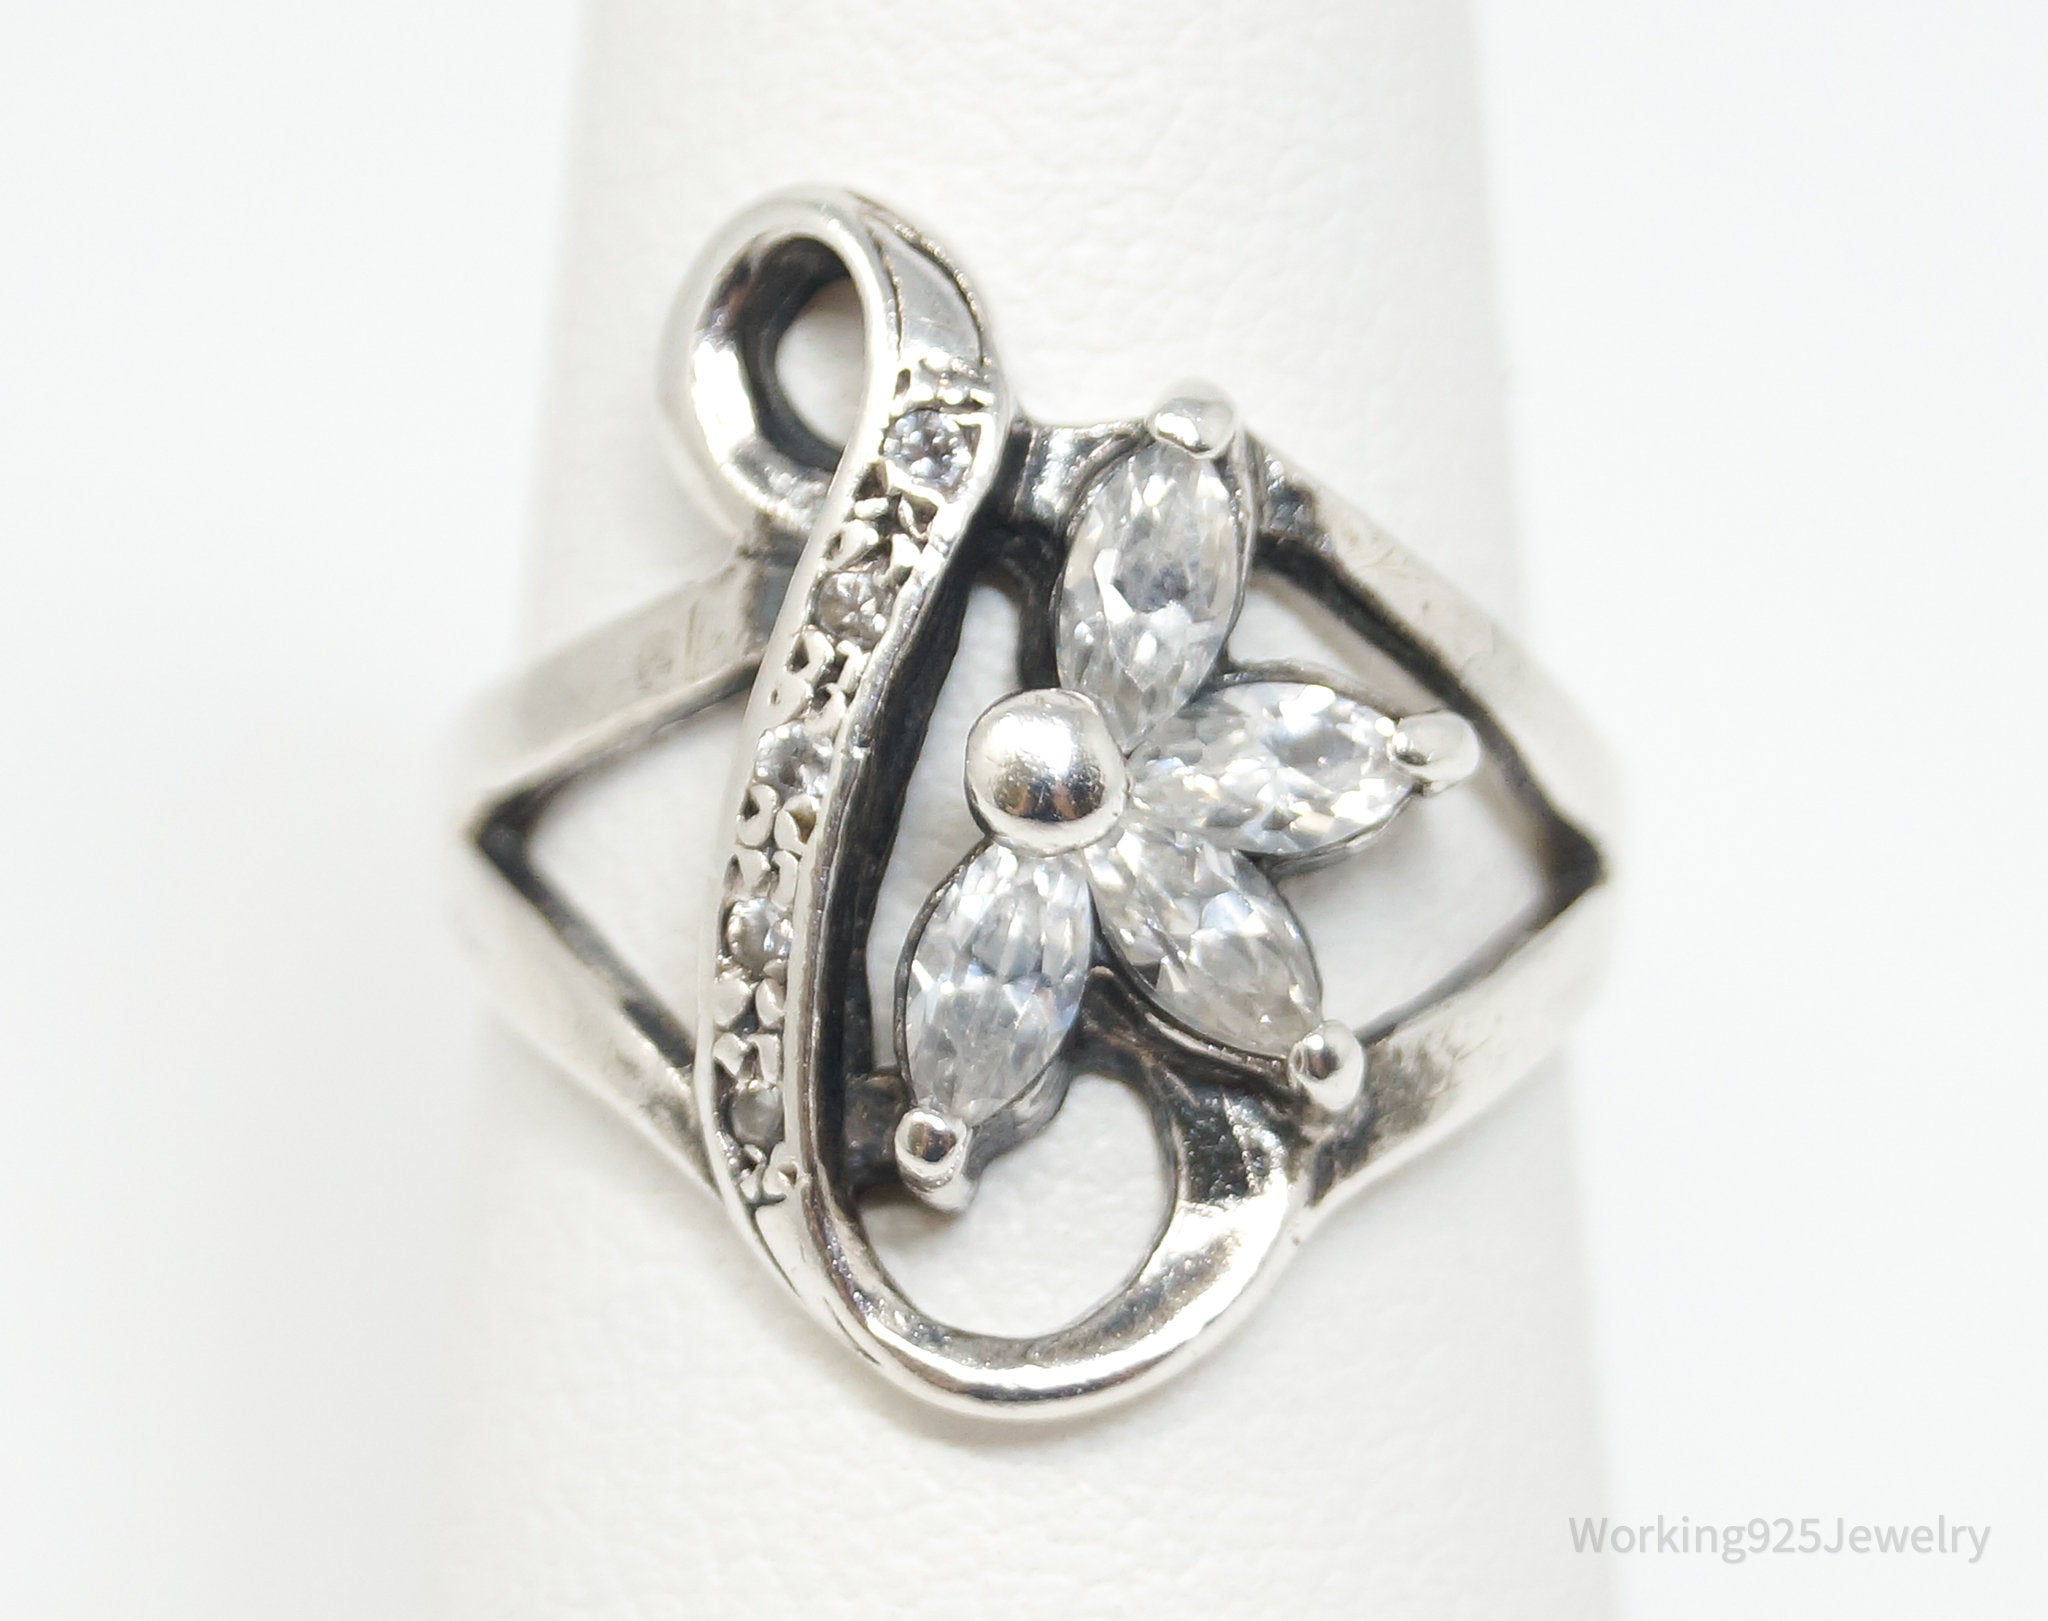 Vintage Art Deco Cubic Zirconia Floral Sterling Silver Ring - Sz 5.75